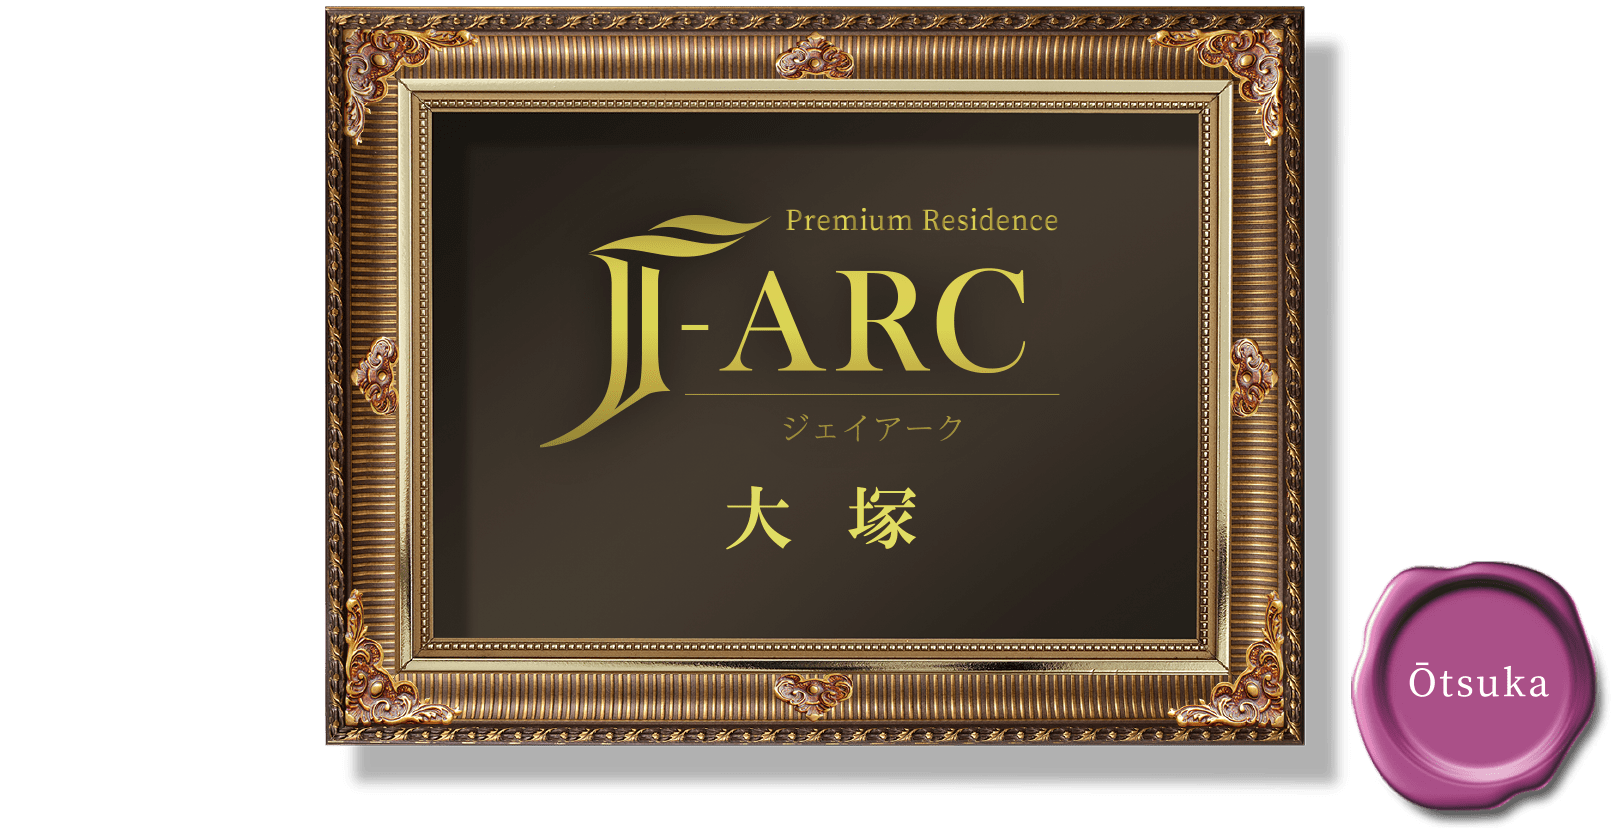 Premium Residence J-ARC 大塚